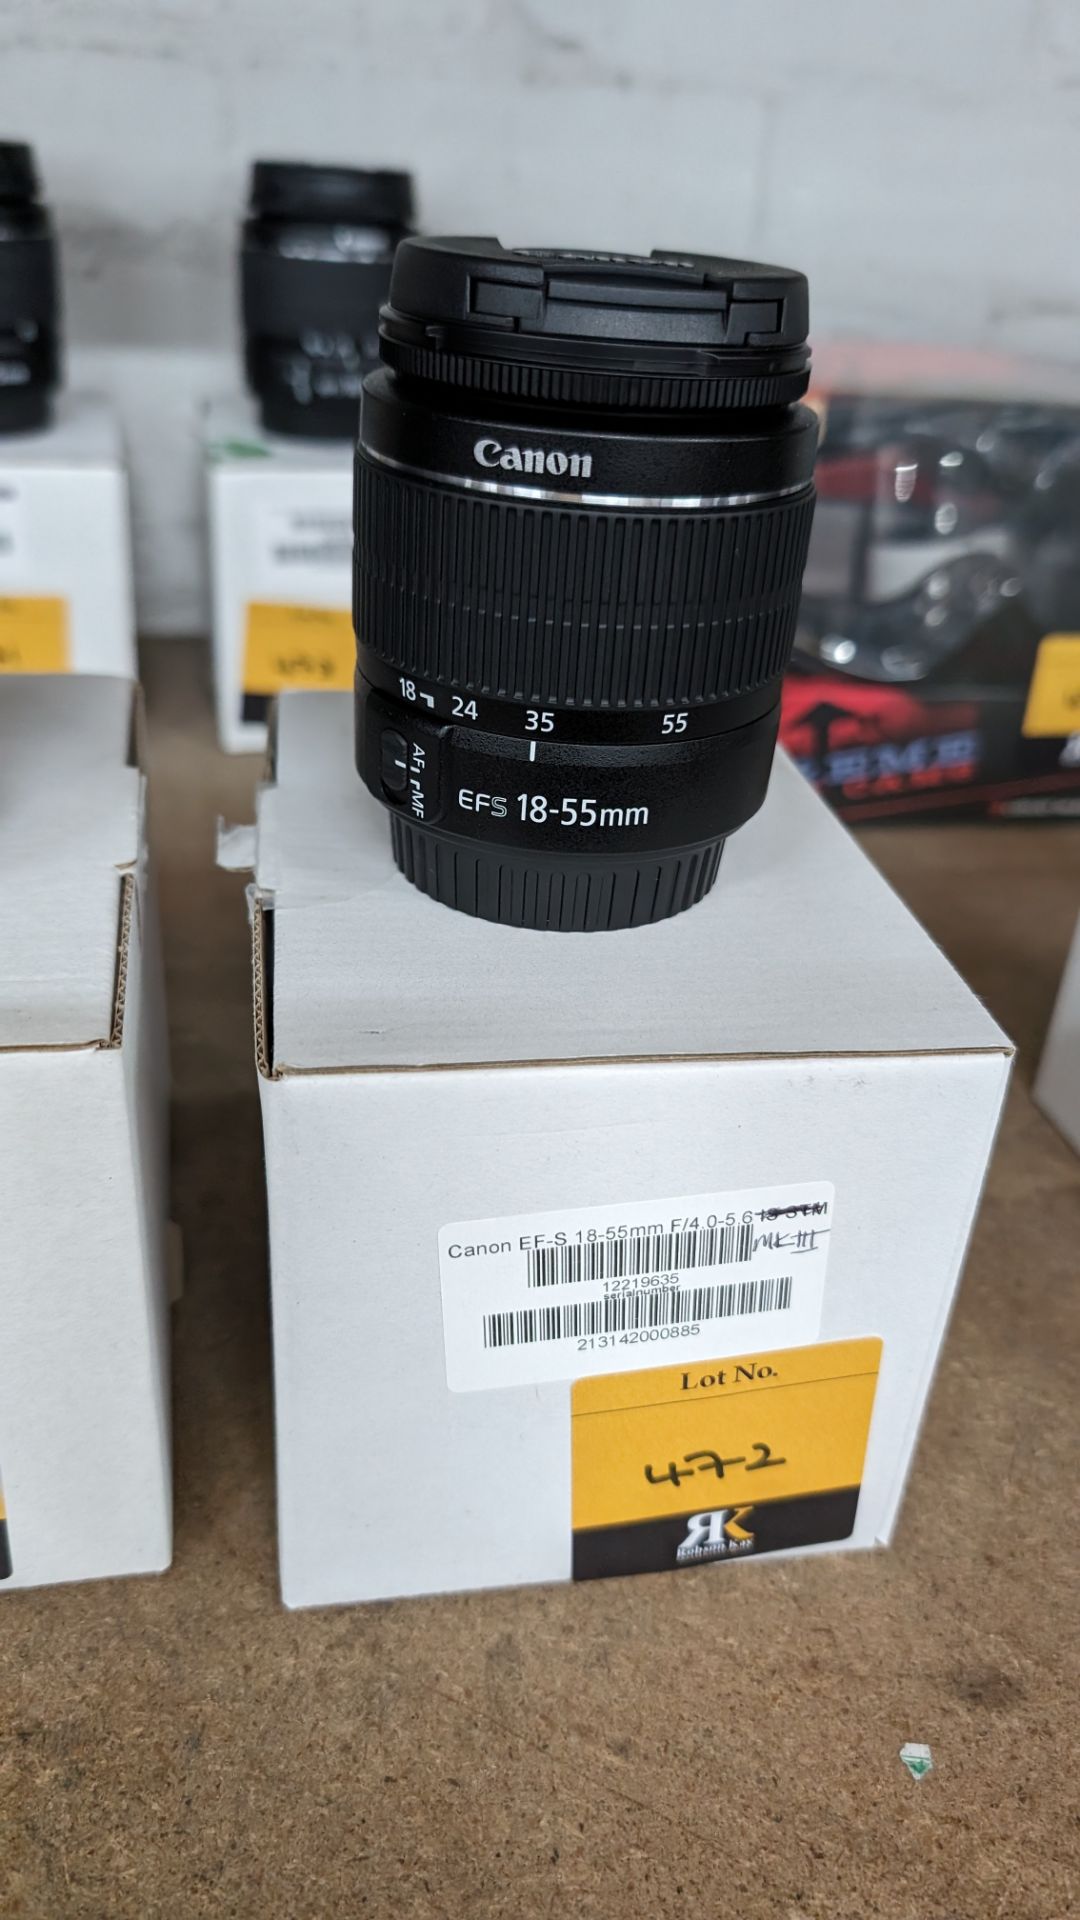 Canon EFS 18-55mm lens. MK III